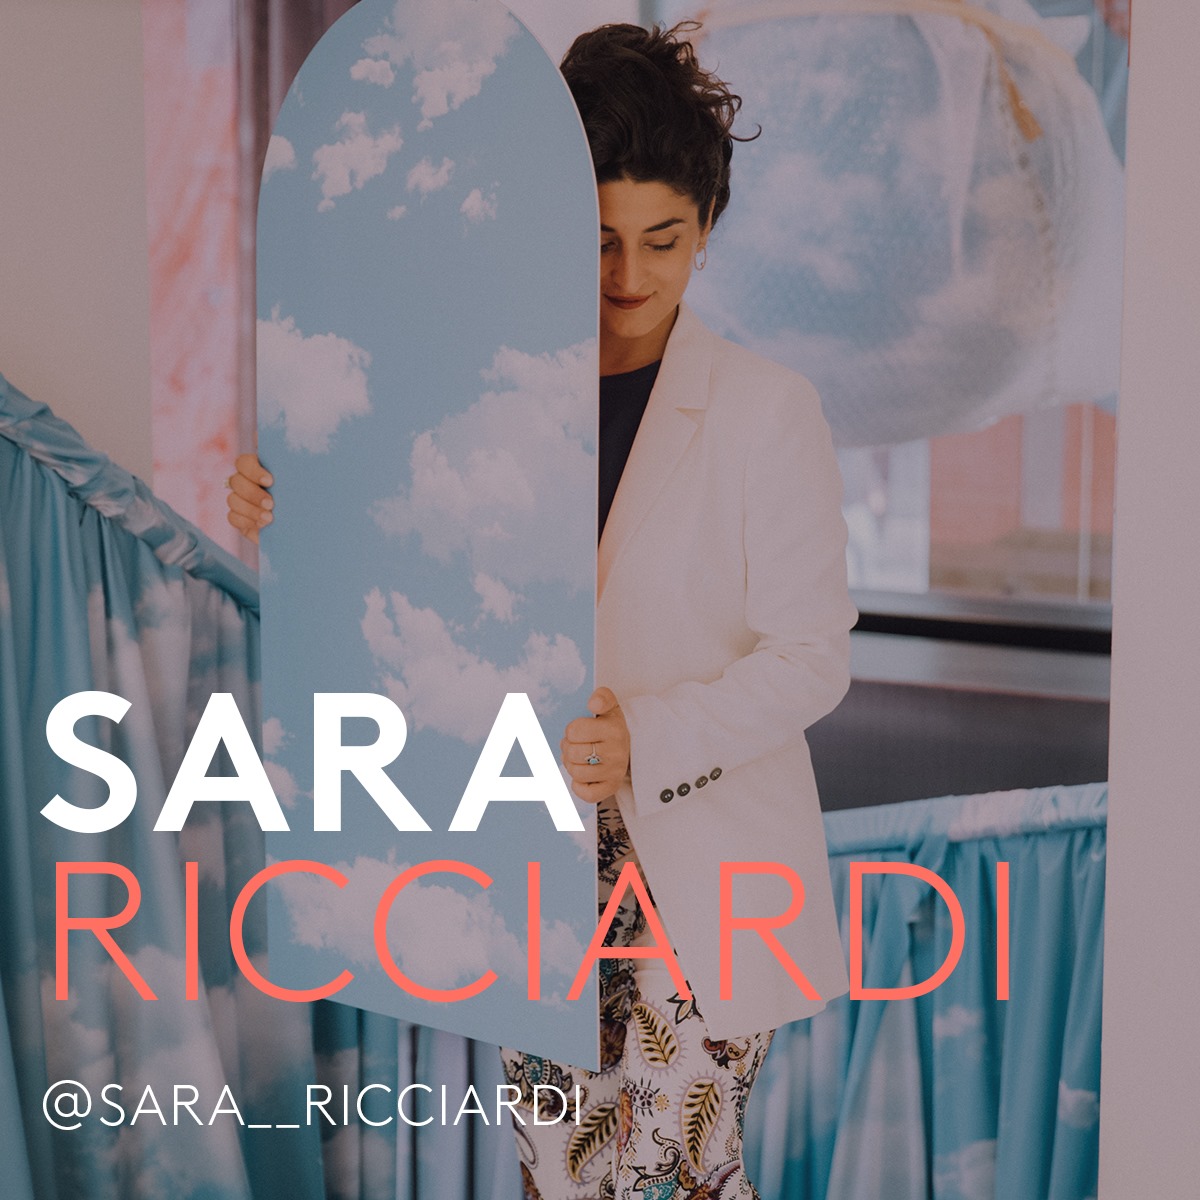 #nelfrattempo with SARA RICCIARDI, Italian Designer & Interior Designer✨ Discover more about her > festivalwalk